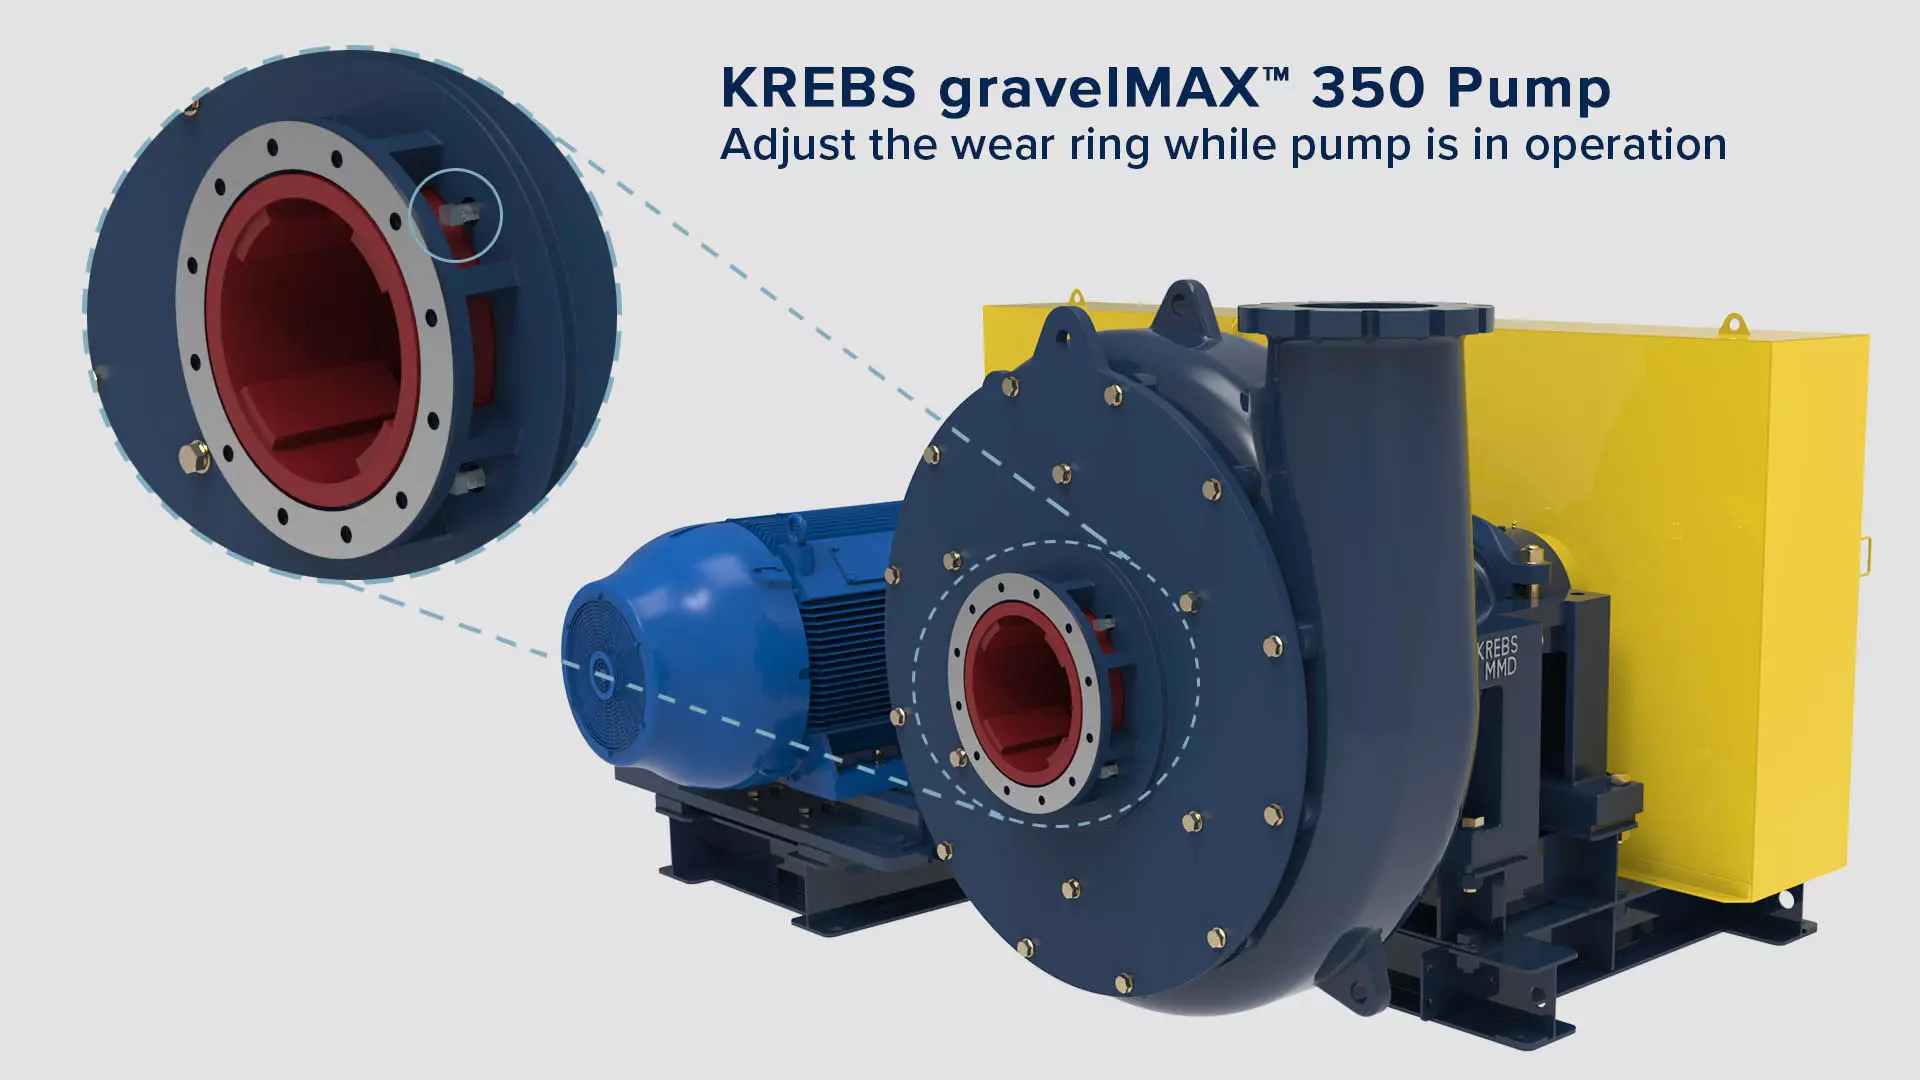 KREBS gravelMAX slurry pump for mining and dredging